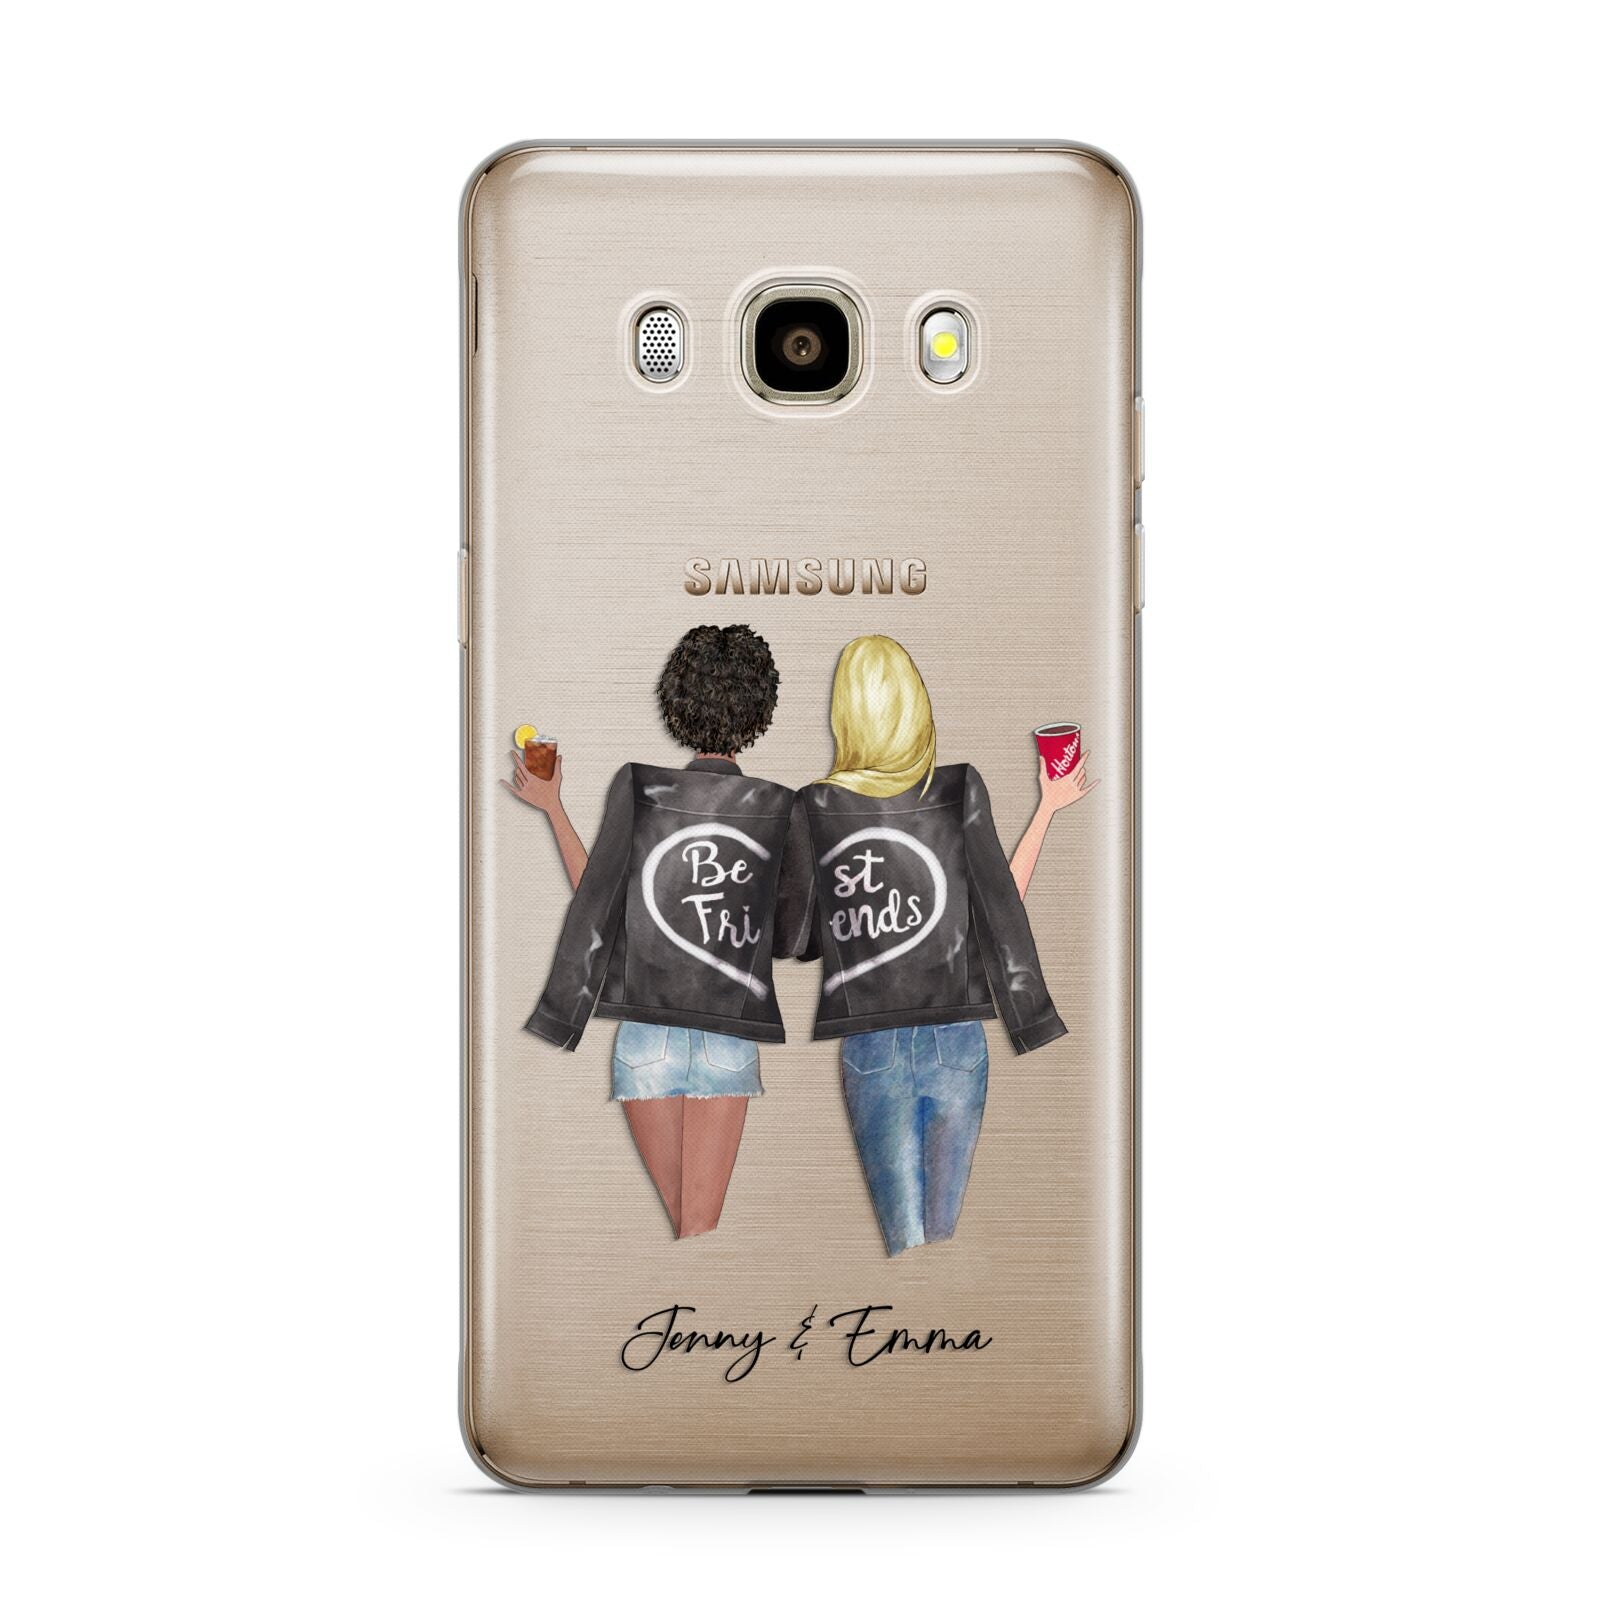 Best Friends Samsung Galaxy J7 2016 Case on gold phone